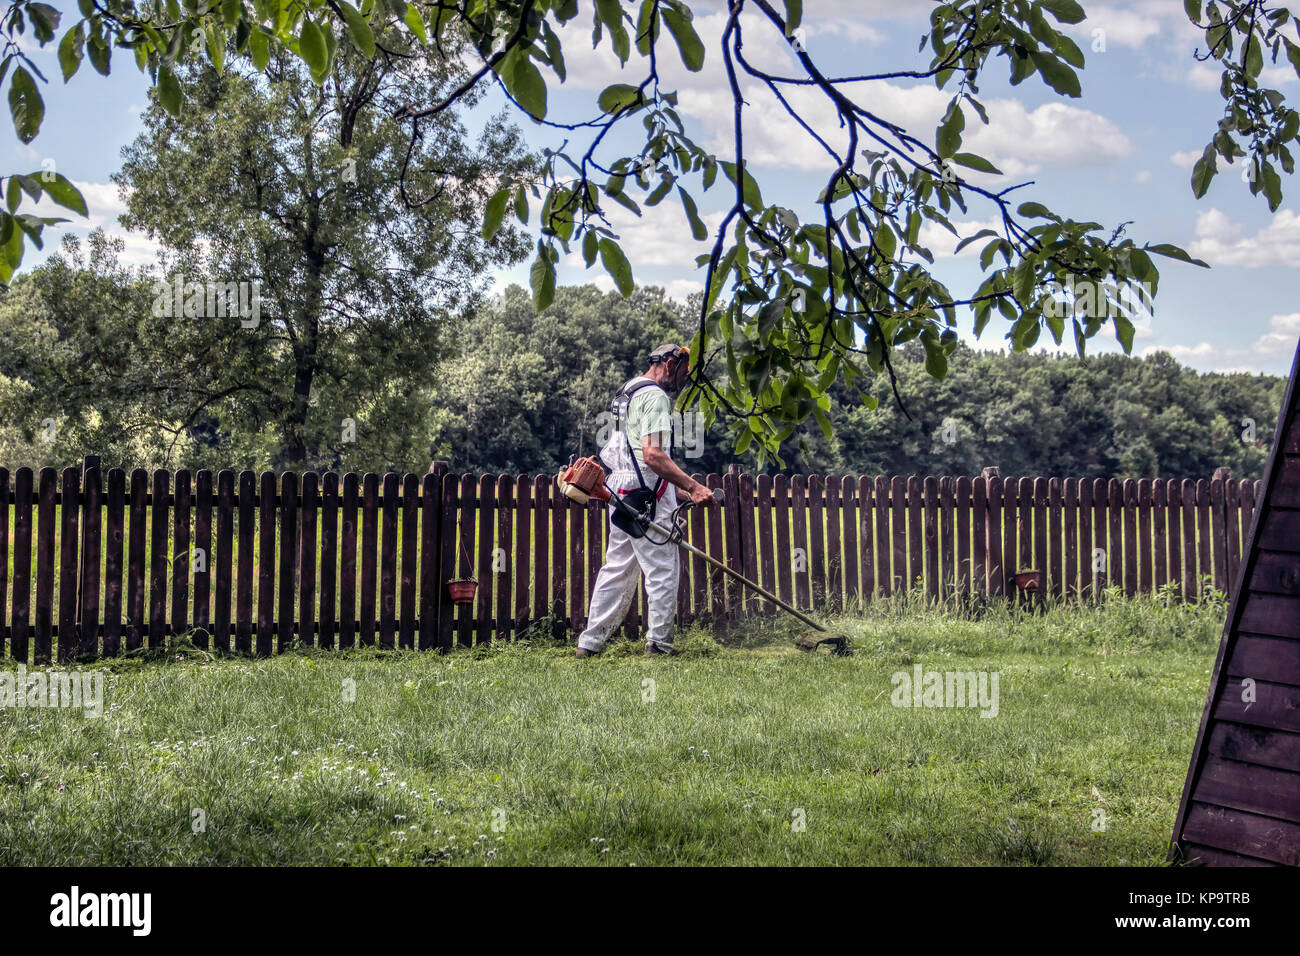 Countryside, Serbia - Man cutting grass Stock Photo